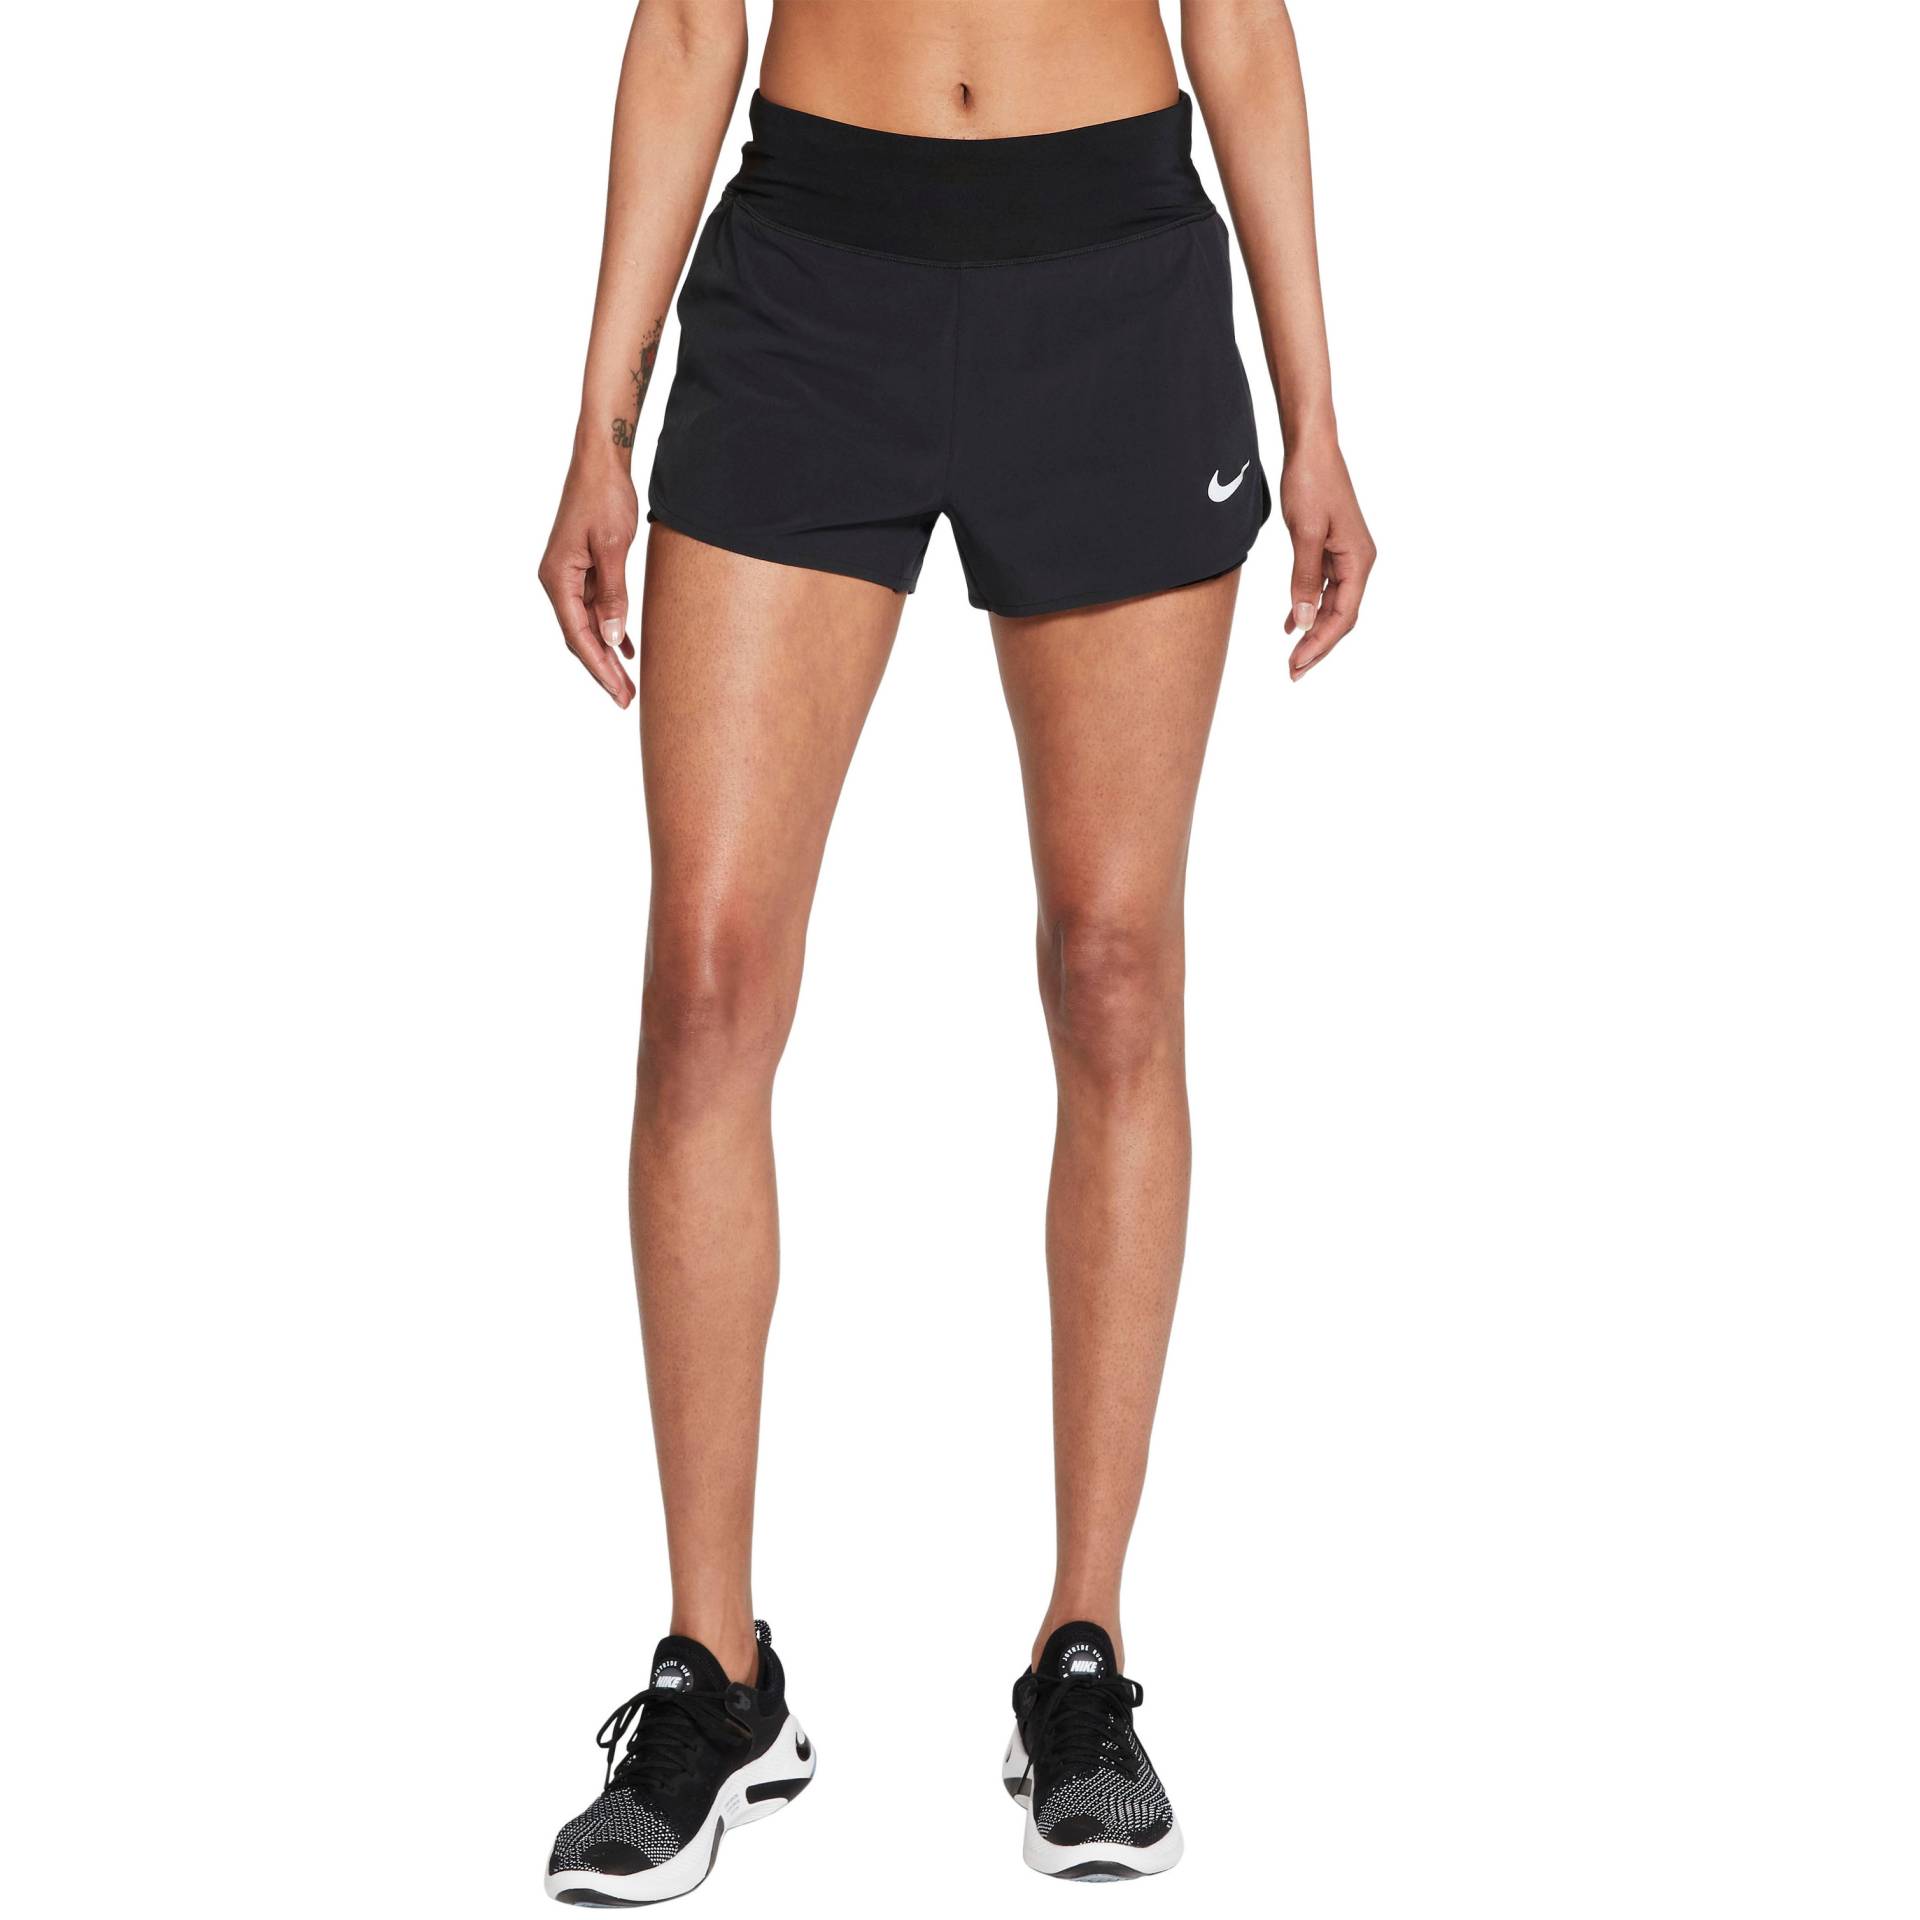 Nike Laufshorts »Nike Eclipse Women's 2-in-1 Running Shorts« von Nike